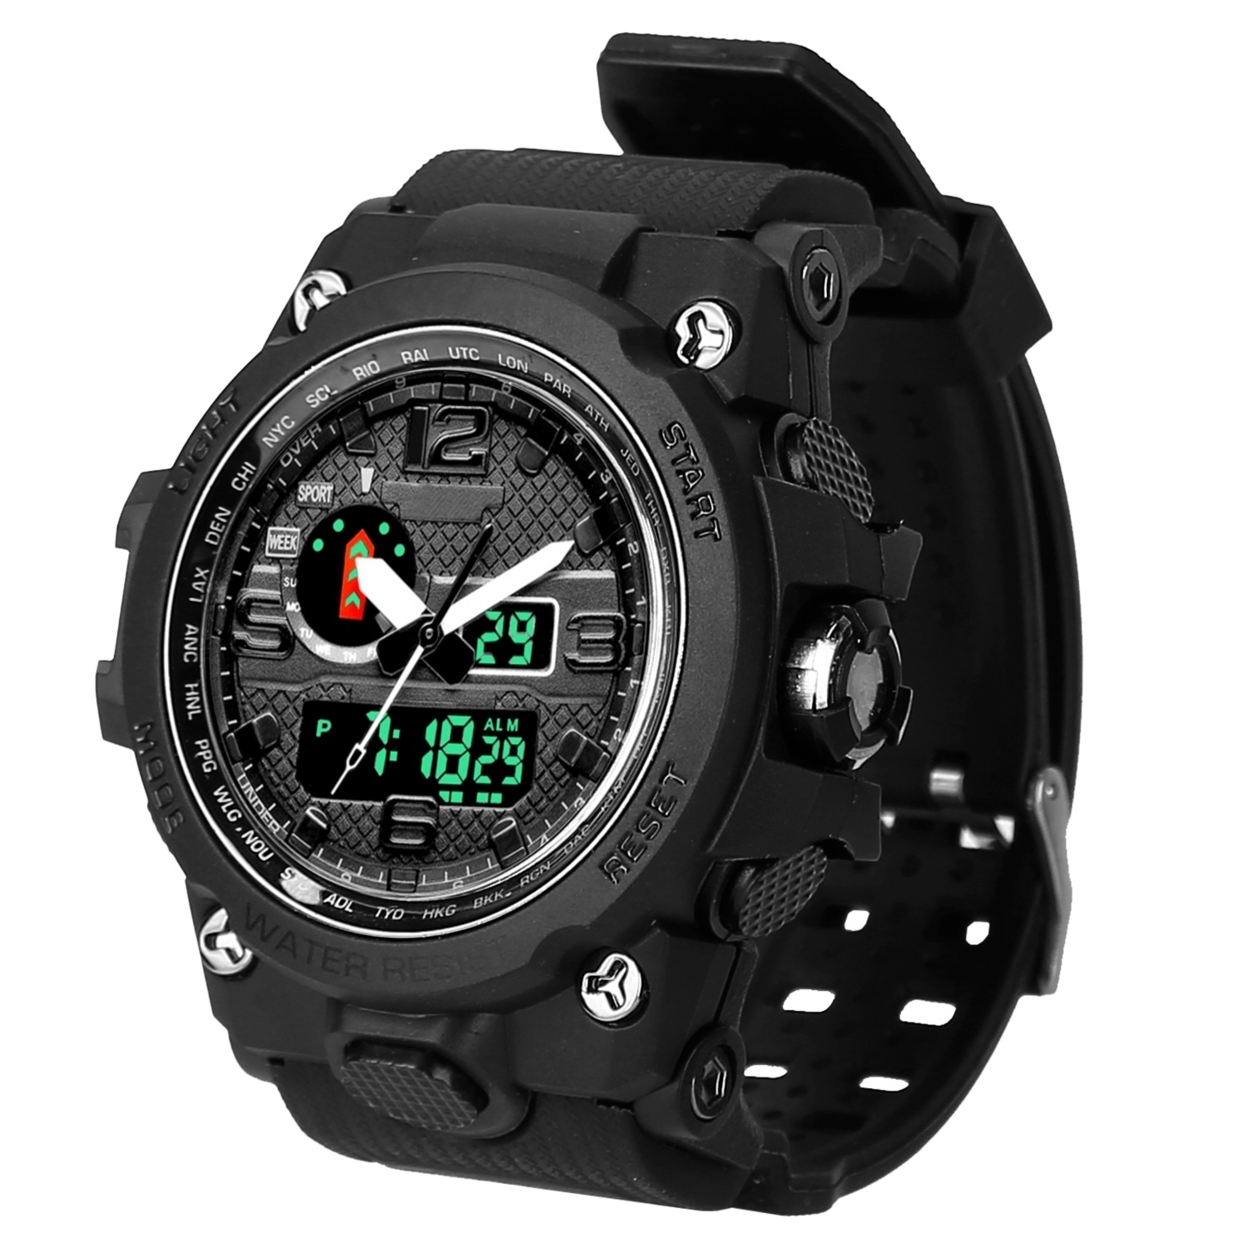 Generic Men Sports Watch Water-Resistant Military Wrist Watch Digital Analog Watch Quartz Electronic Movement LED Backlight Date Alarm